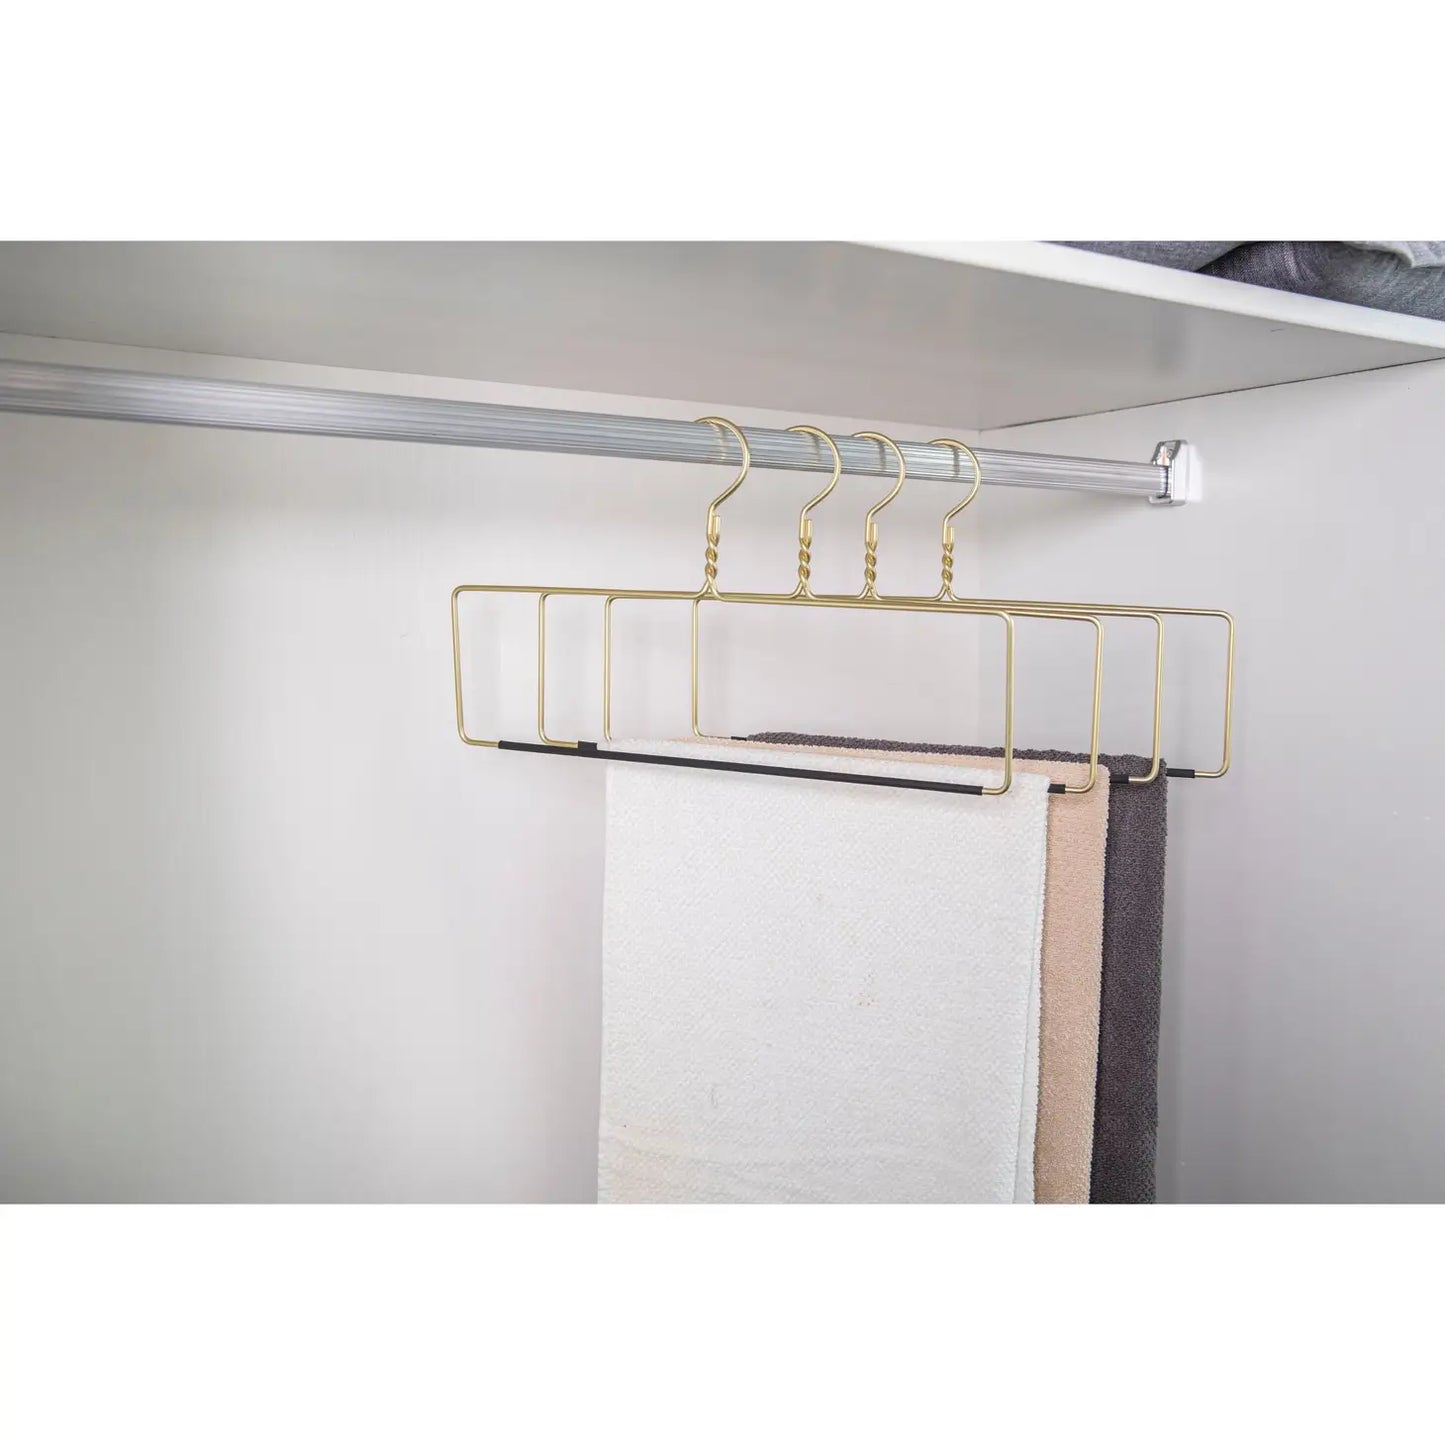 Heavy Duty Blanket Hanger with Gold Hardware and Slip Resistant Bar - Single Hanger